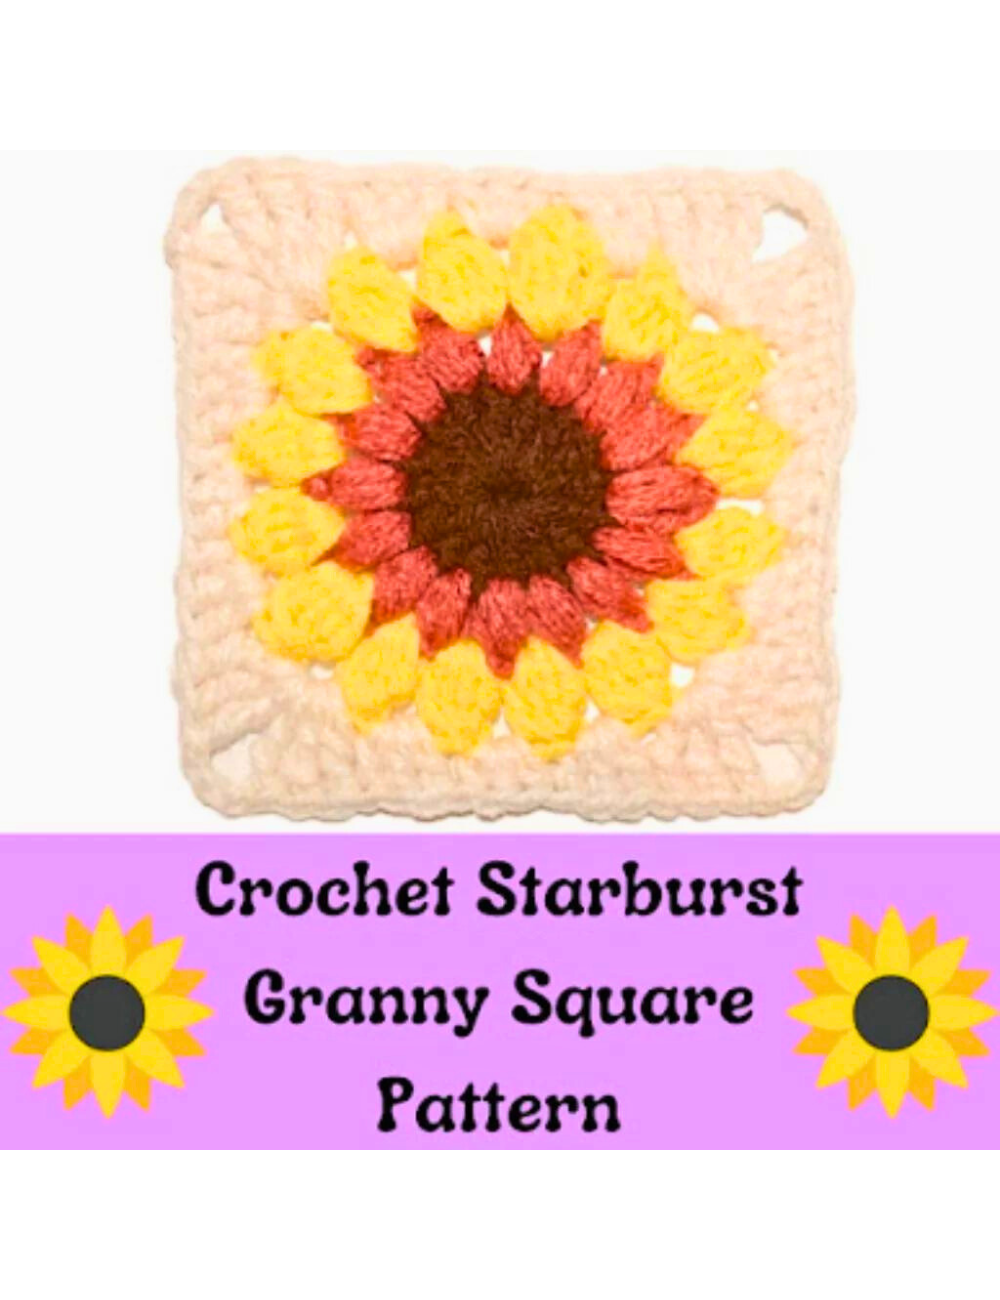 crochet starburst granny square